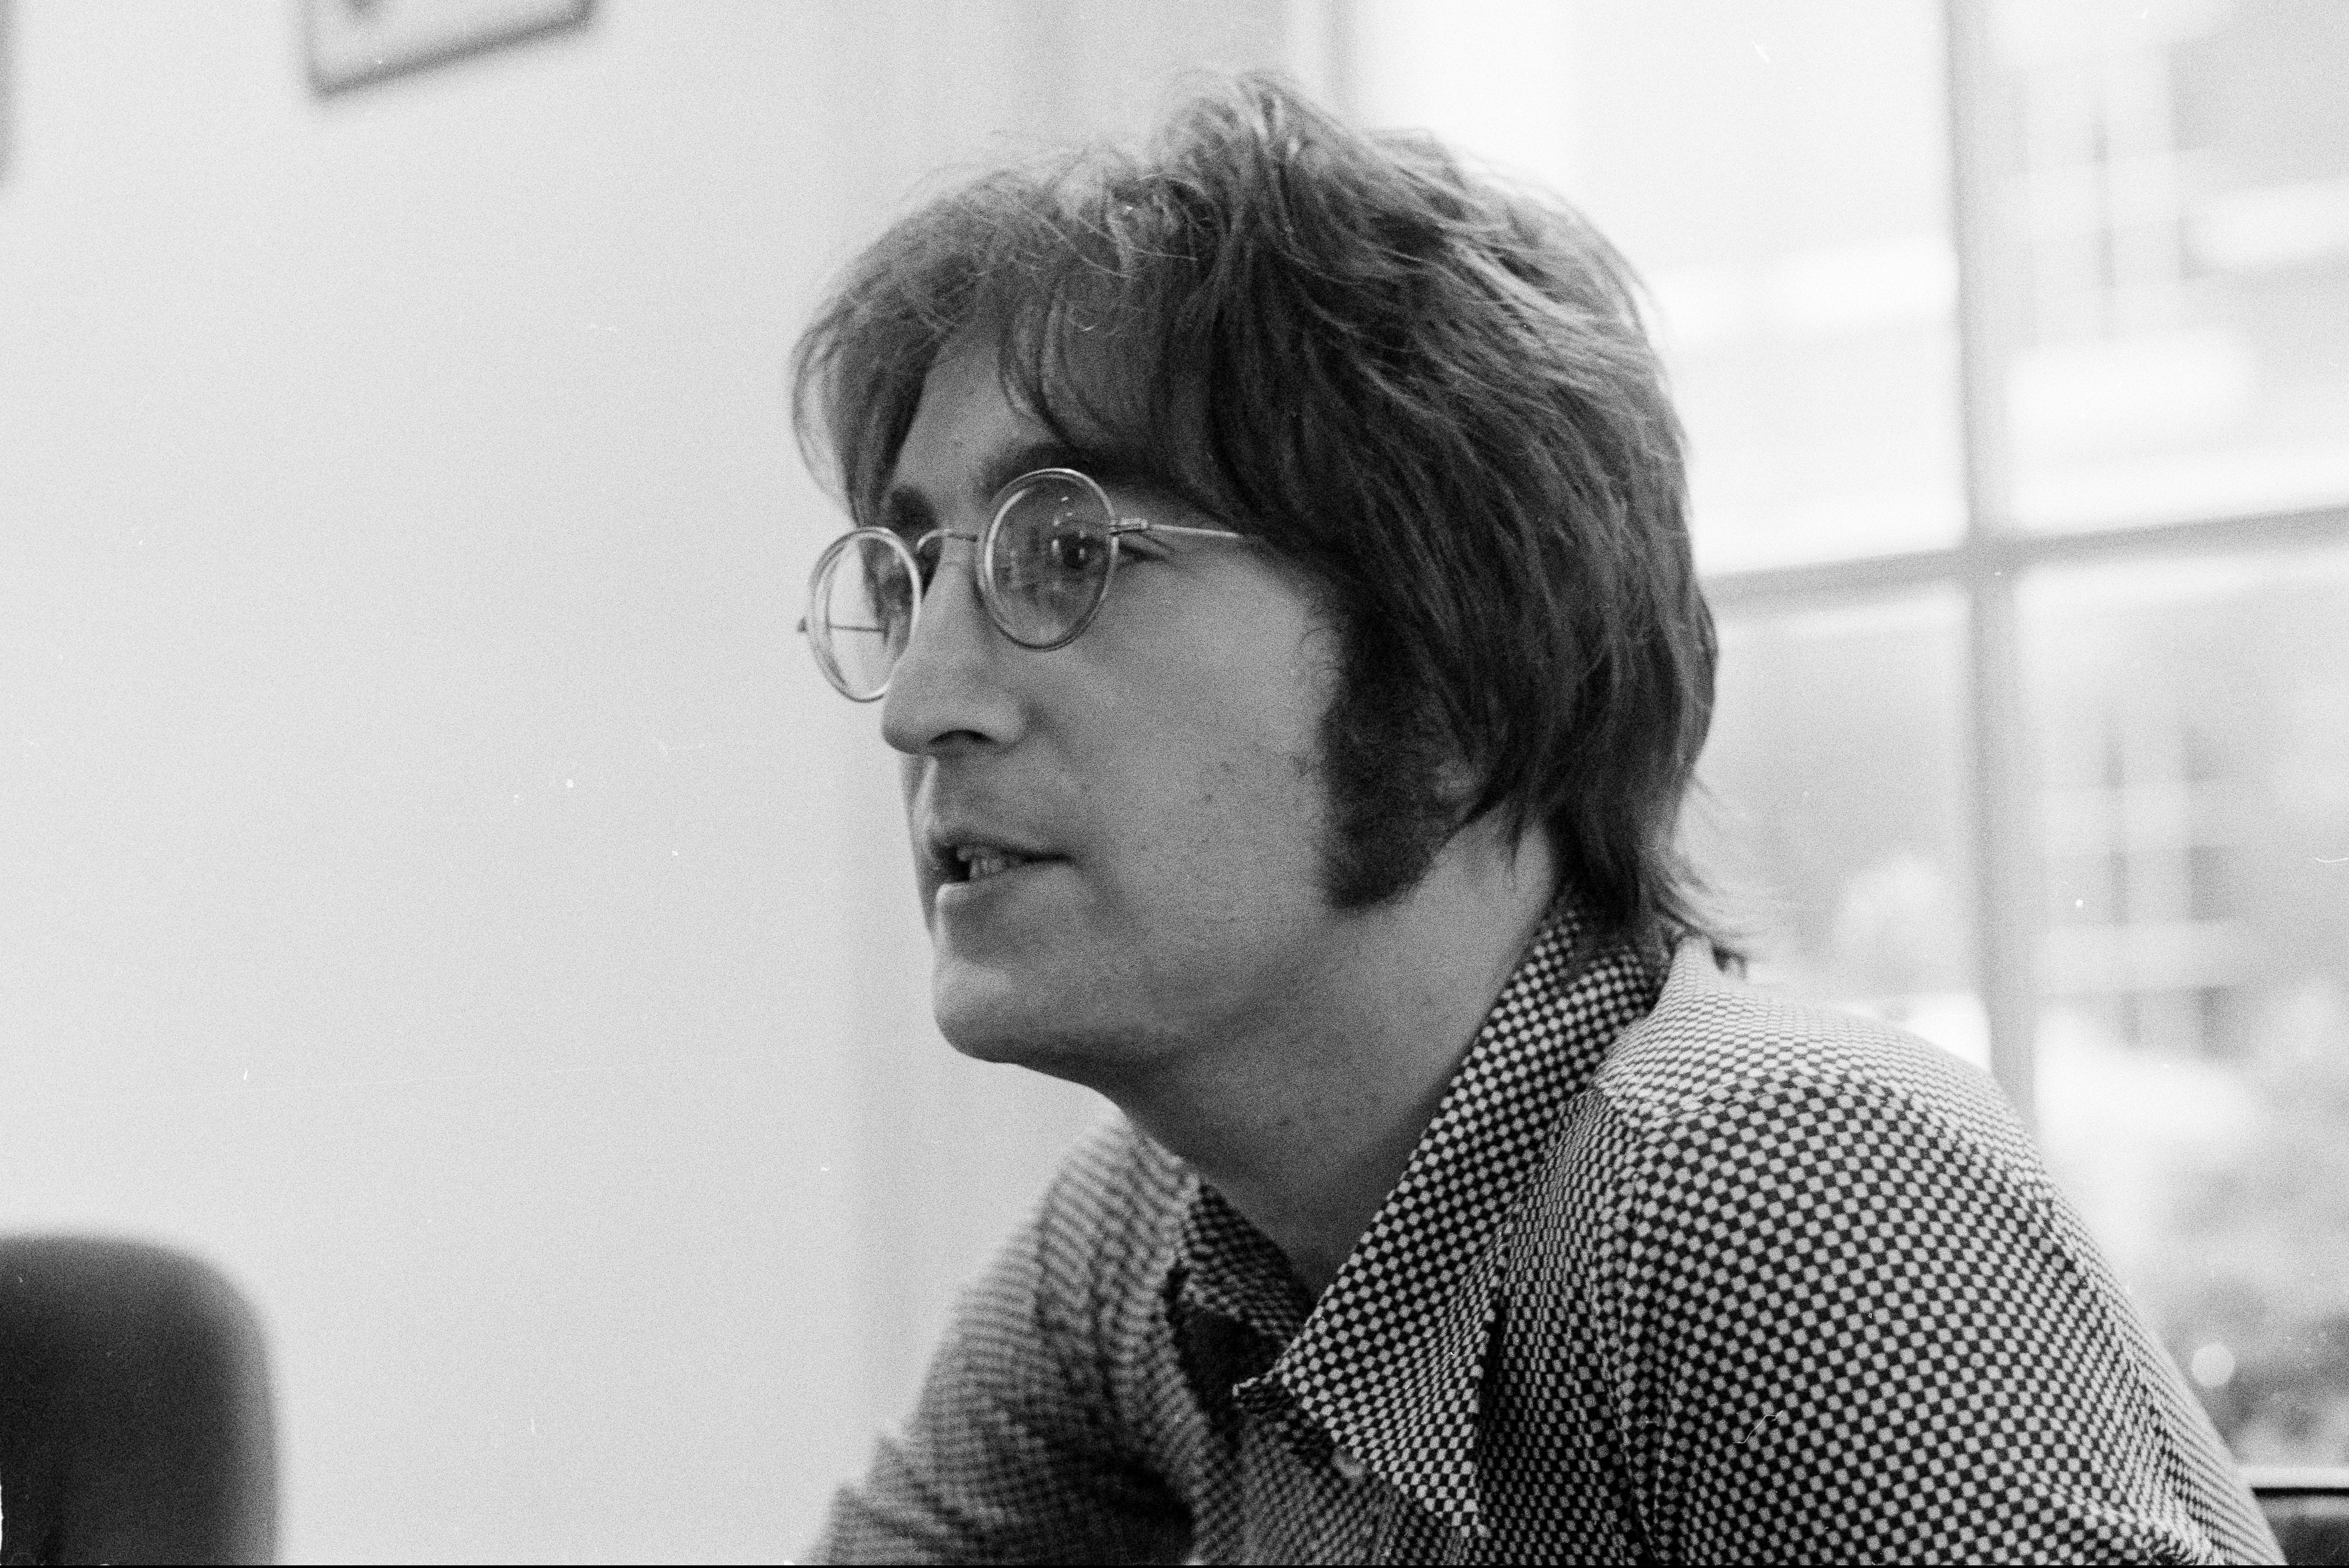 john lennon in 1971